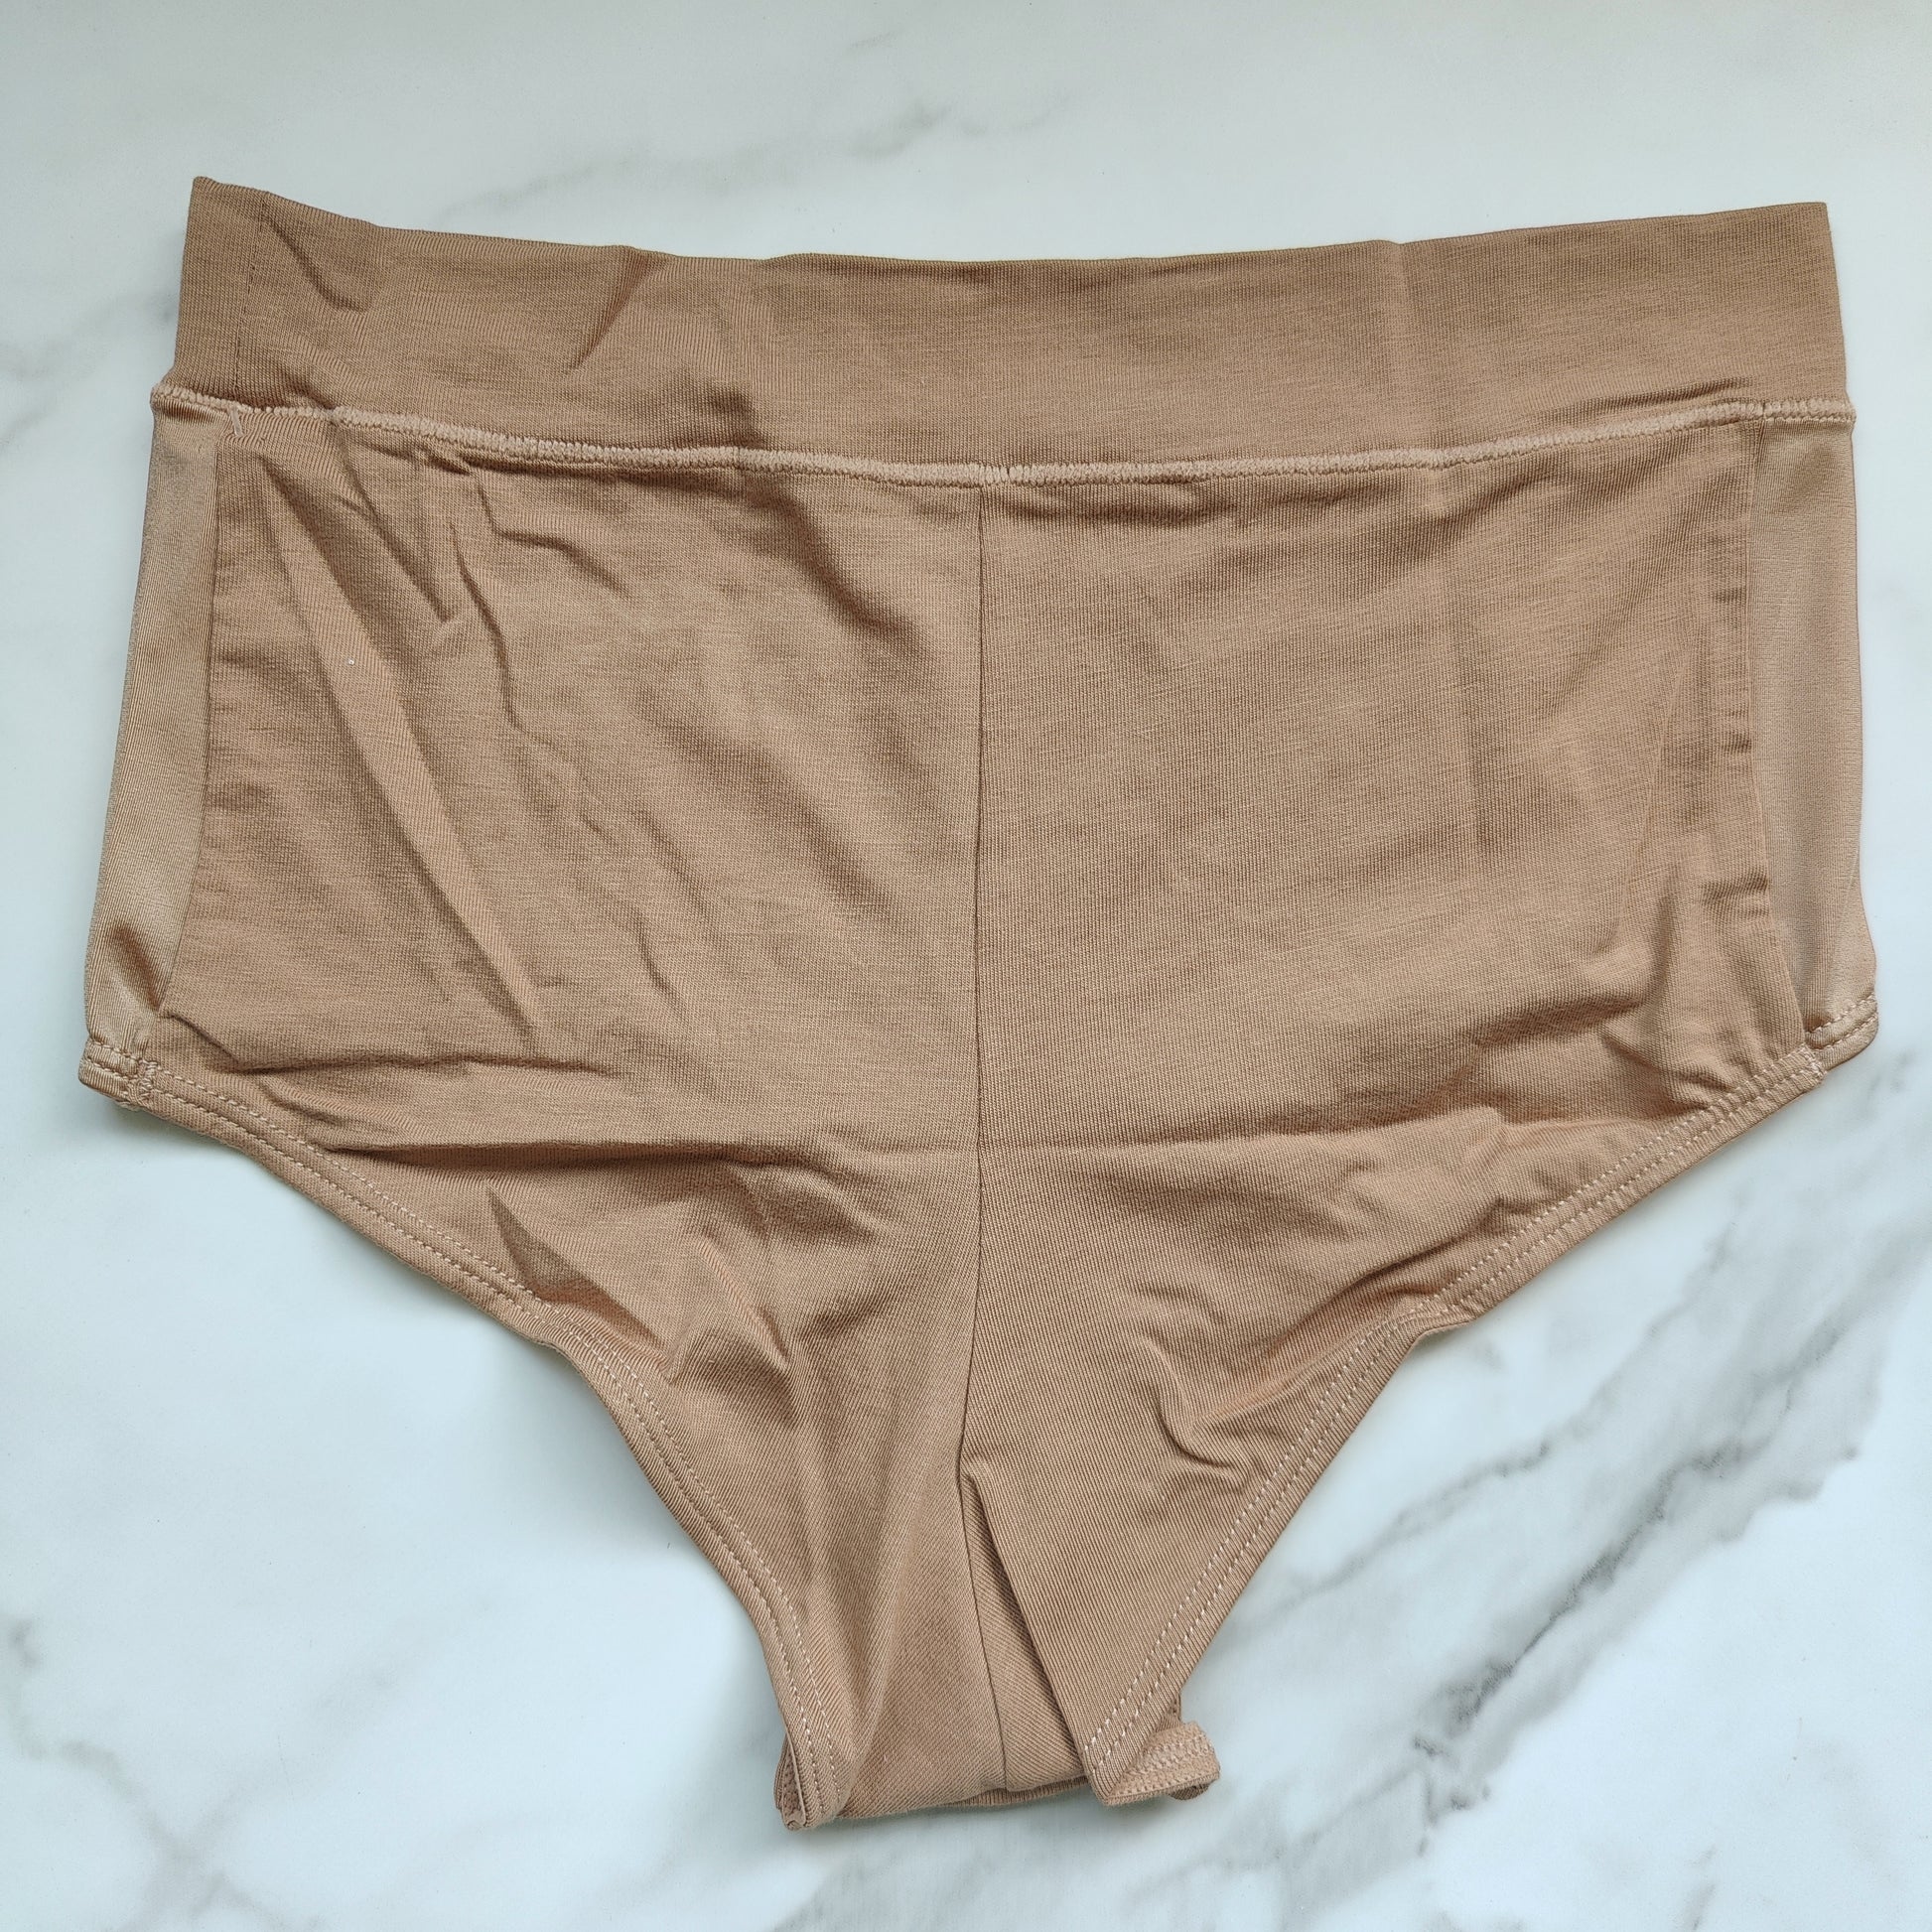 Shop Panties by TellTale - Cheeky, Thong, Bikini & More - Soma